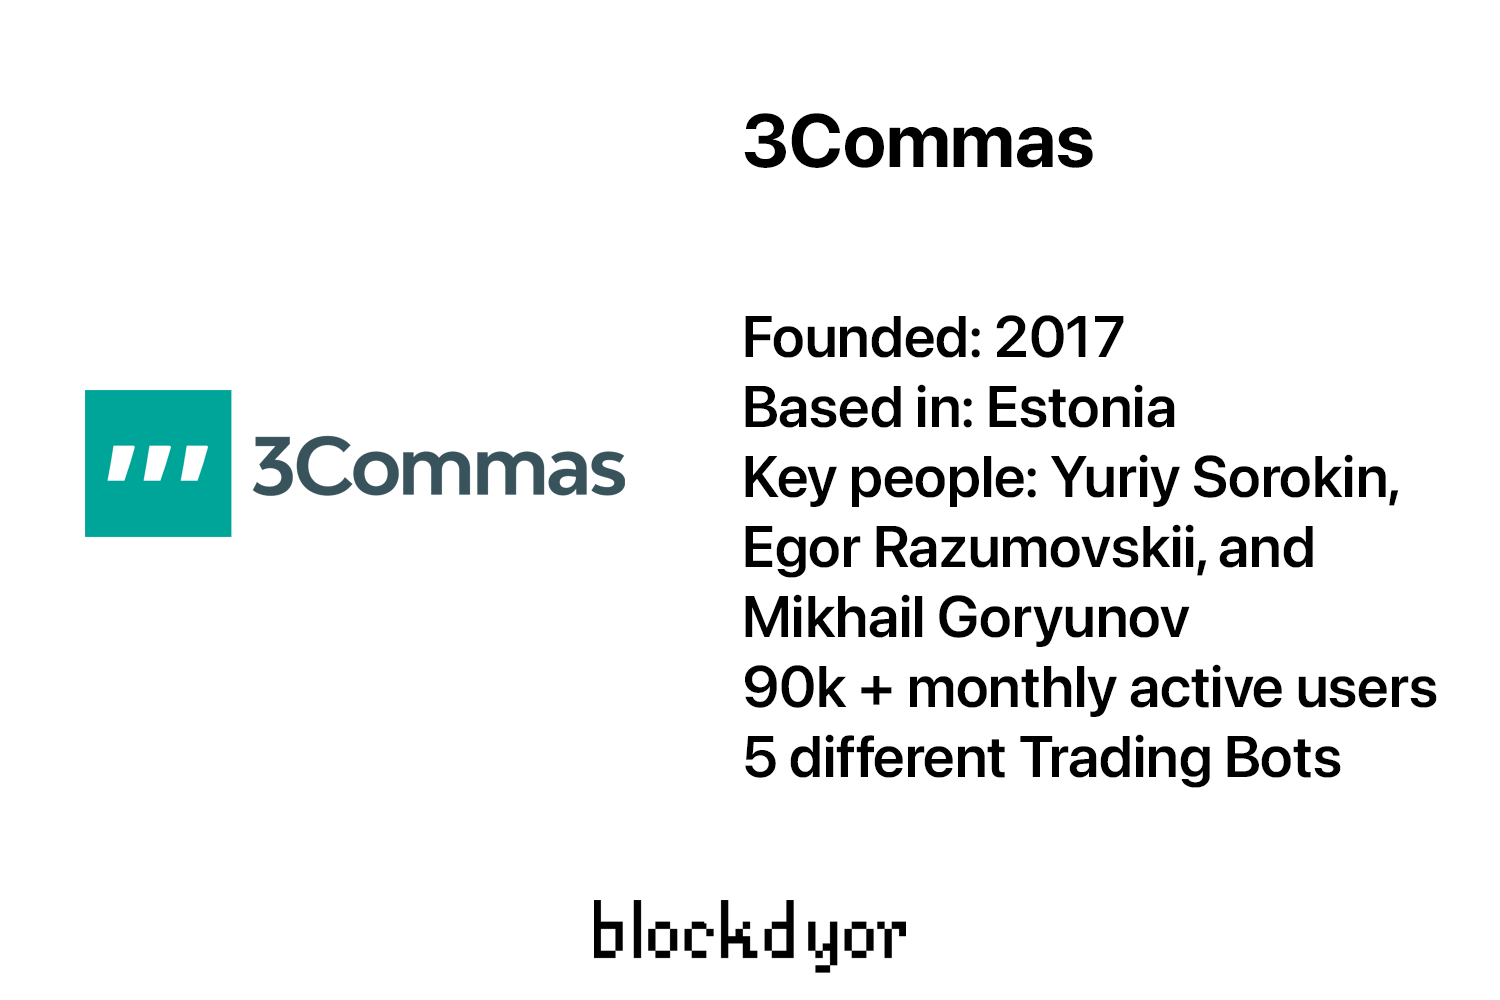 3Commas Overview